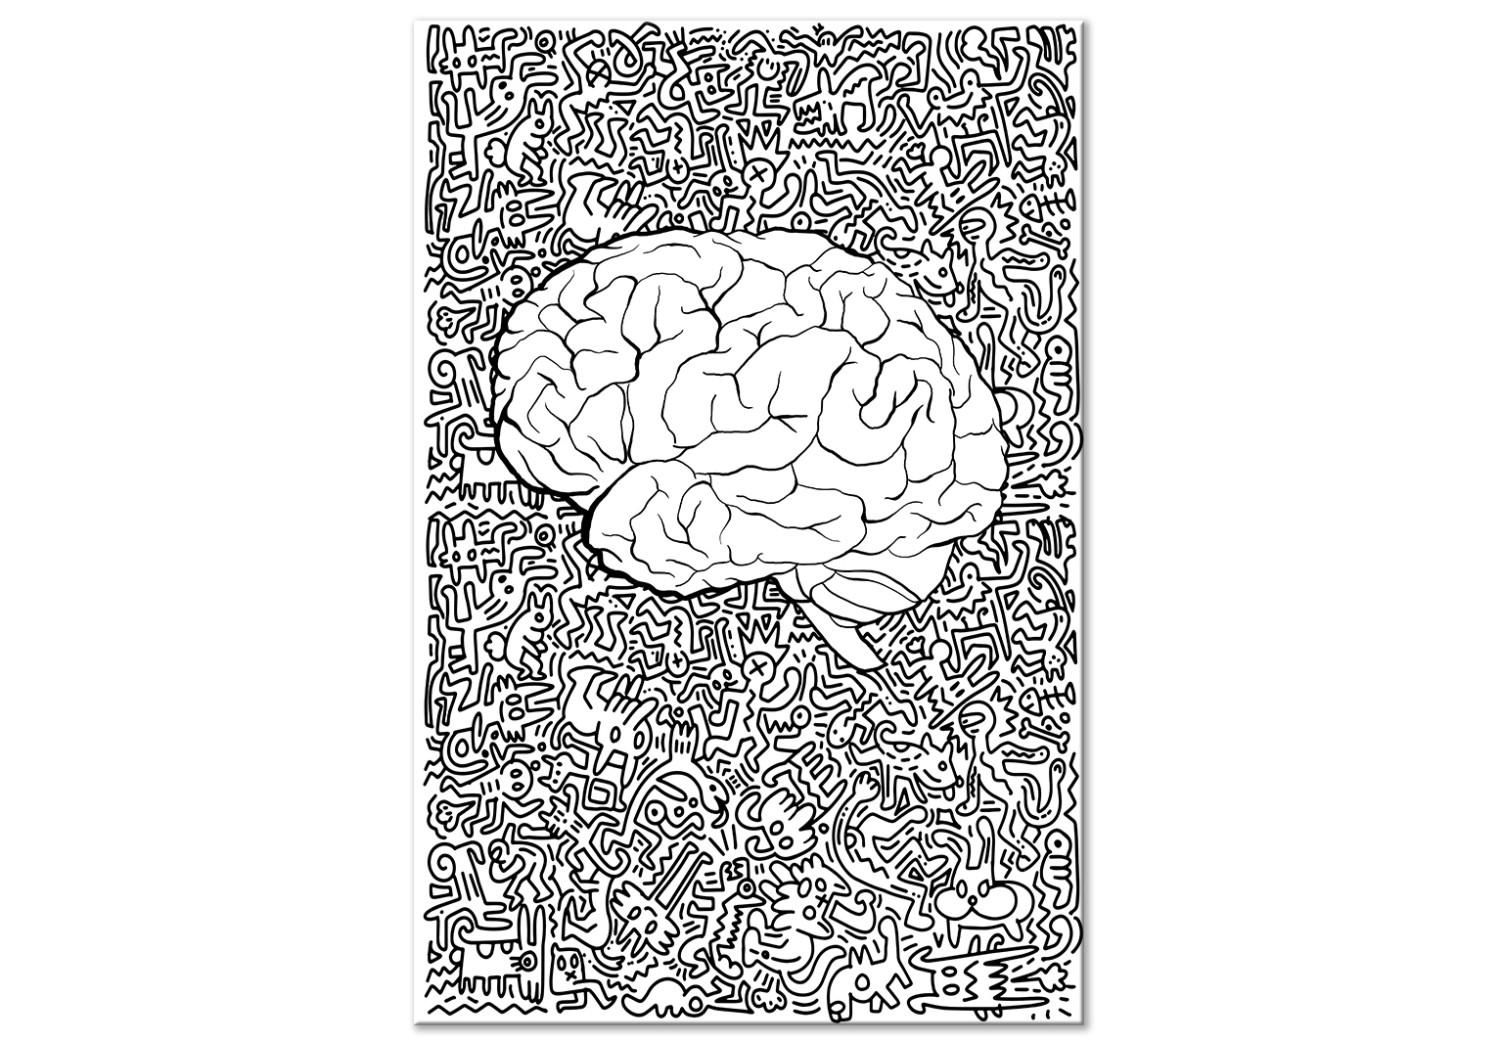 Cuadro moderno Contornos del cerebro anatómico - abstracción con dibujos negros